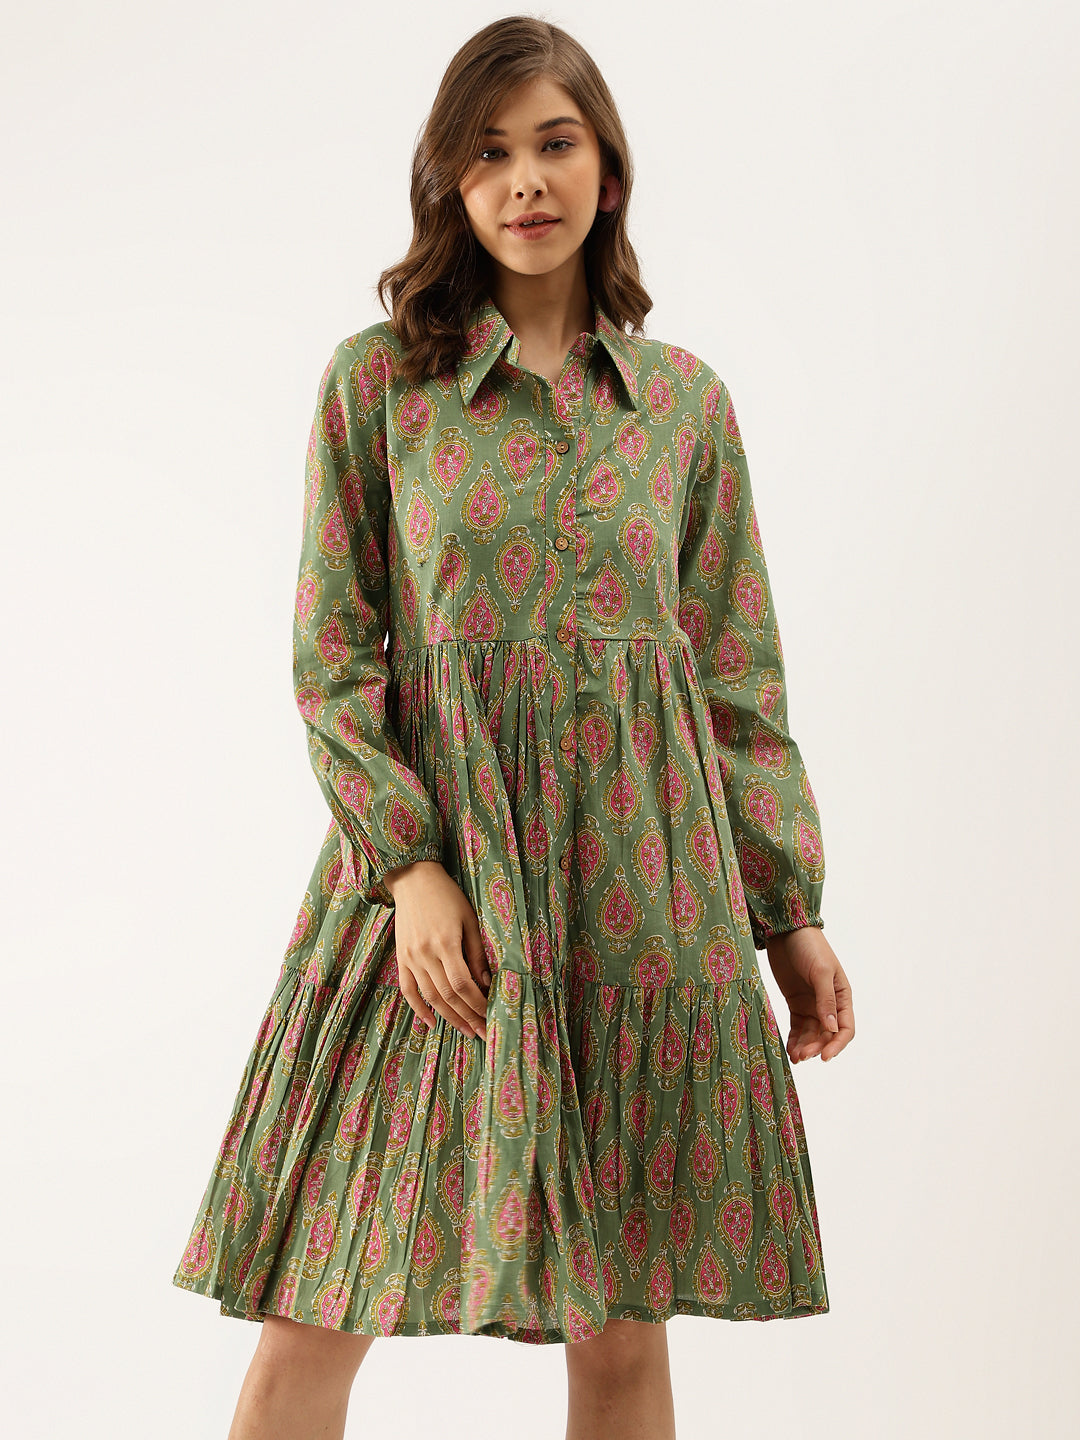 Women's Green Paisley Printed Cotton Dress - Noz2Toz